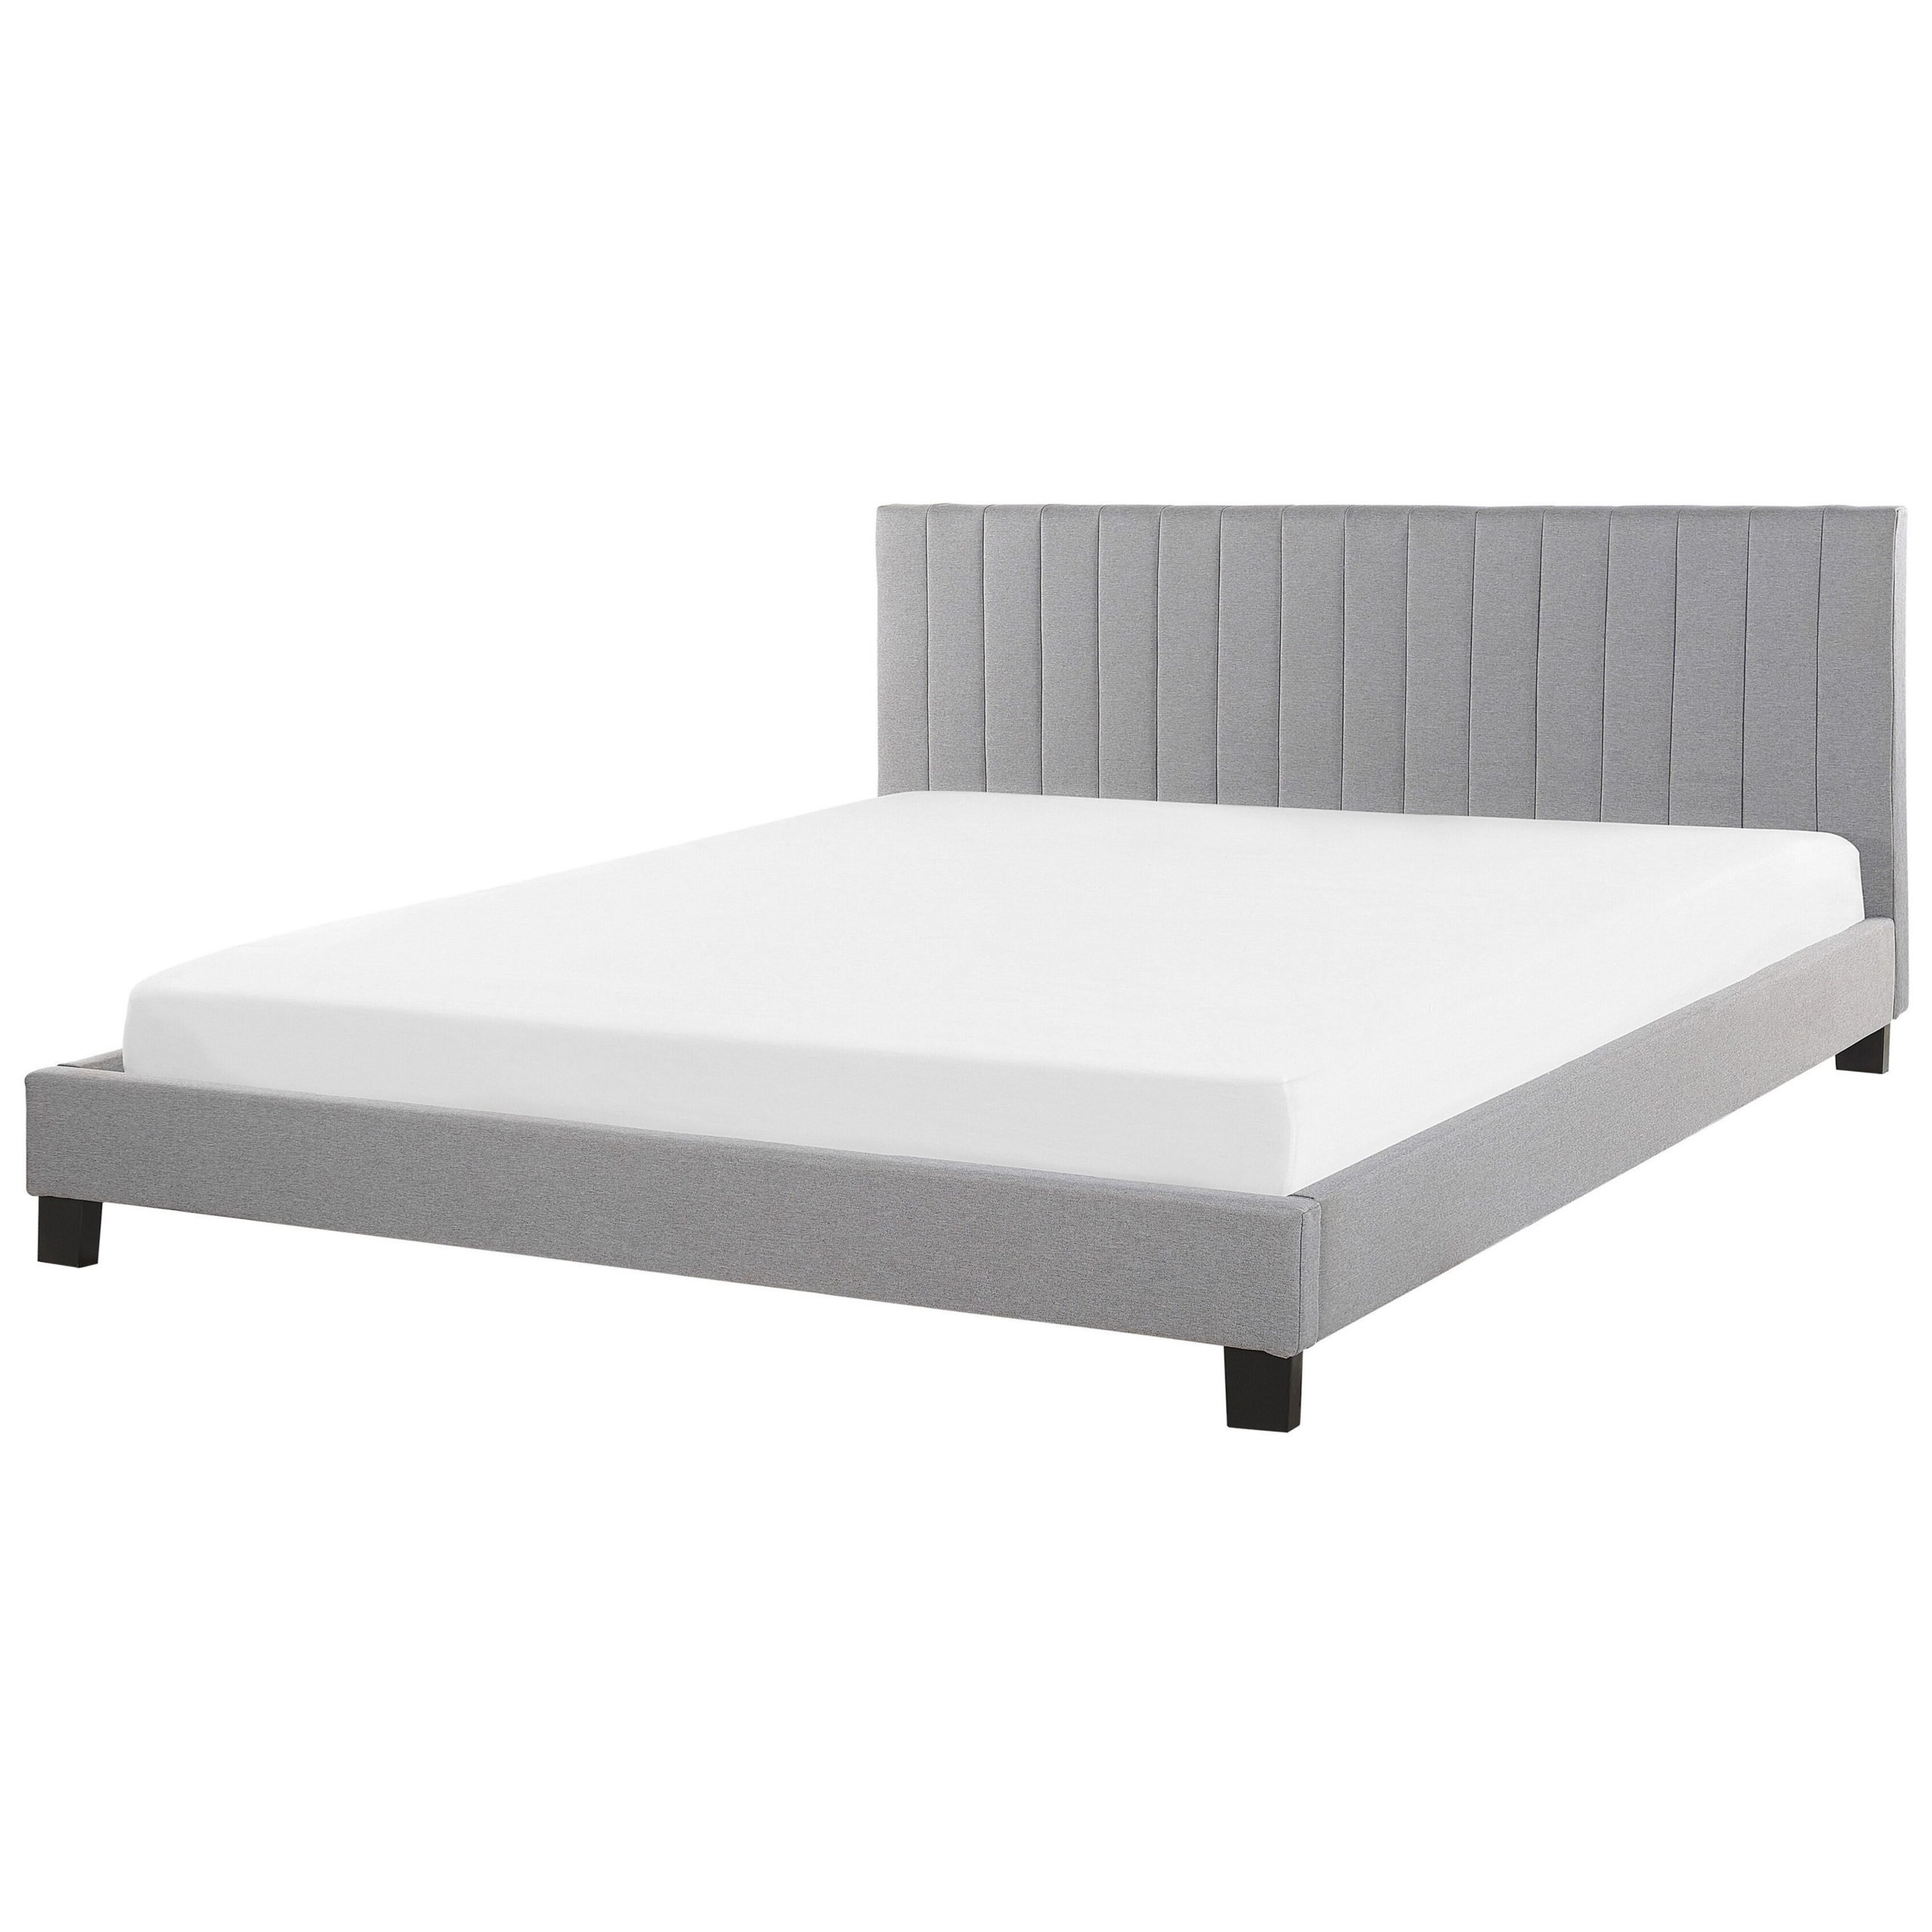 Beliani Panel Bed Light Grey Fabric Upholstery EU Super King Size 6ft with Slatted Base Headboard